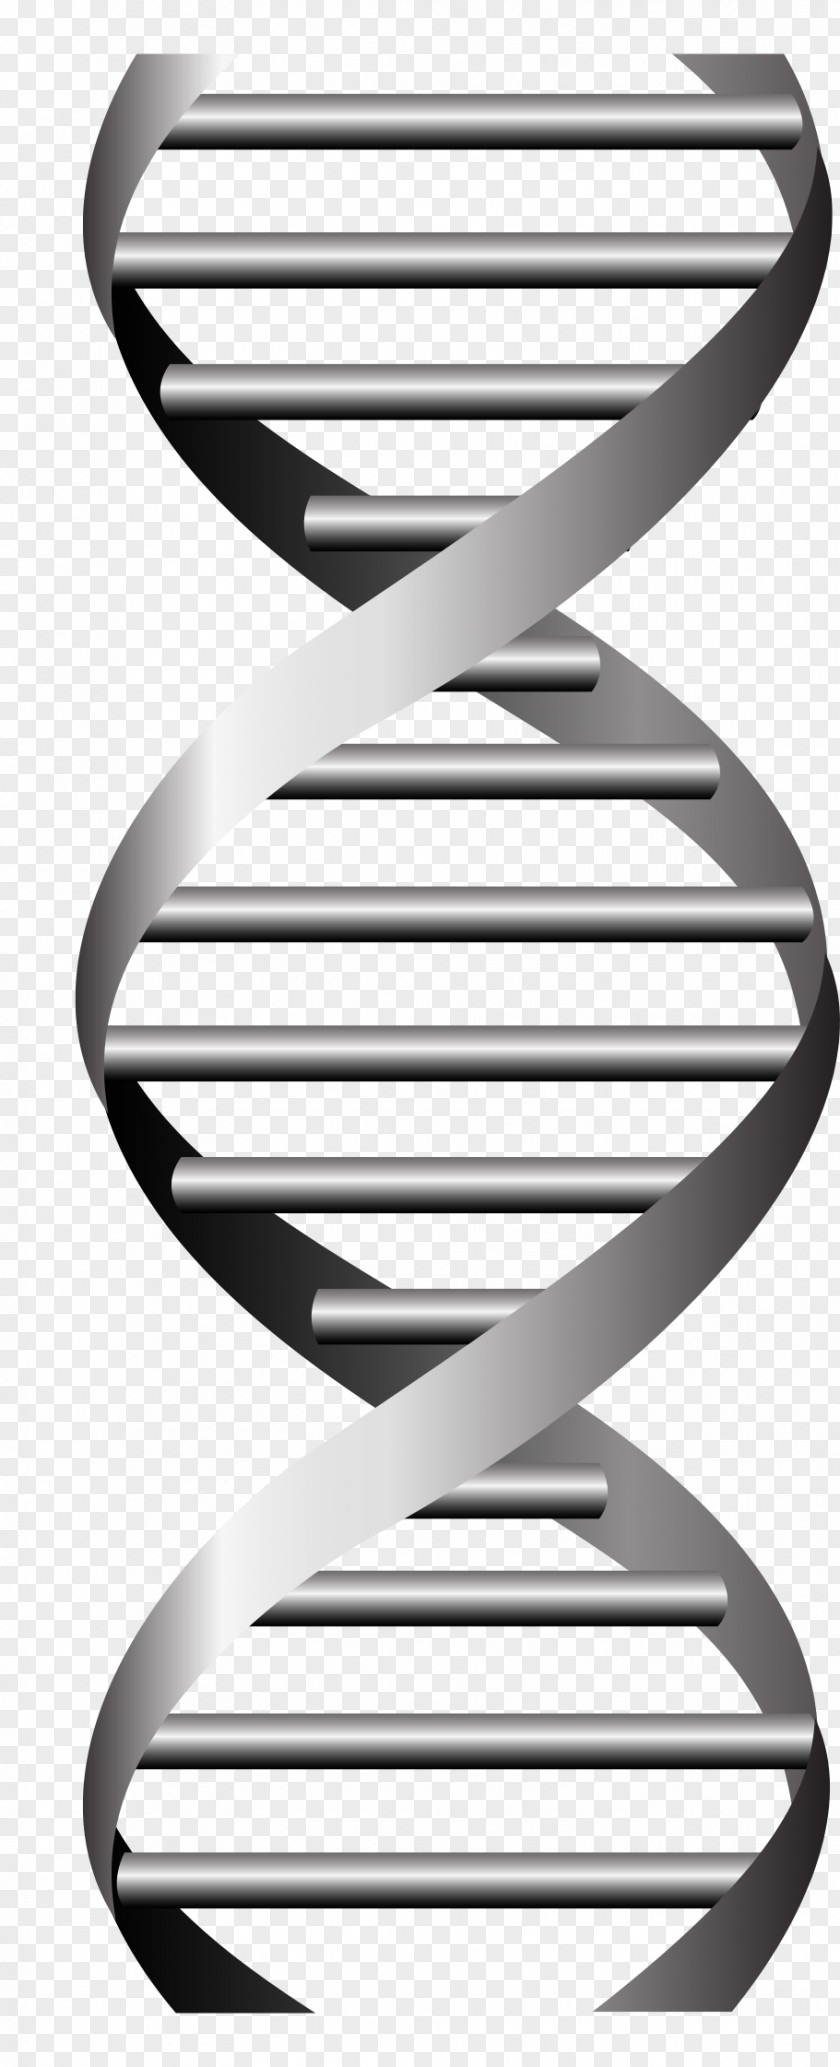 Science Symbols Dna DNA Vector Graphics Nucleic Acid Double Helix Genetics PNG